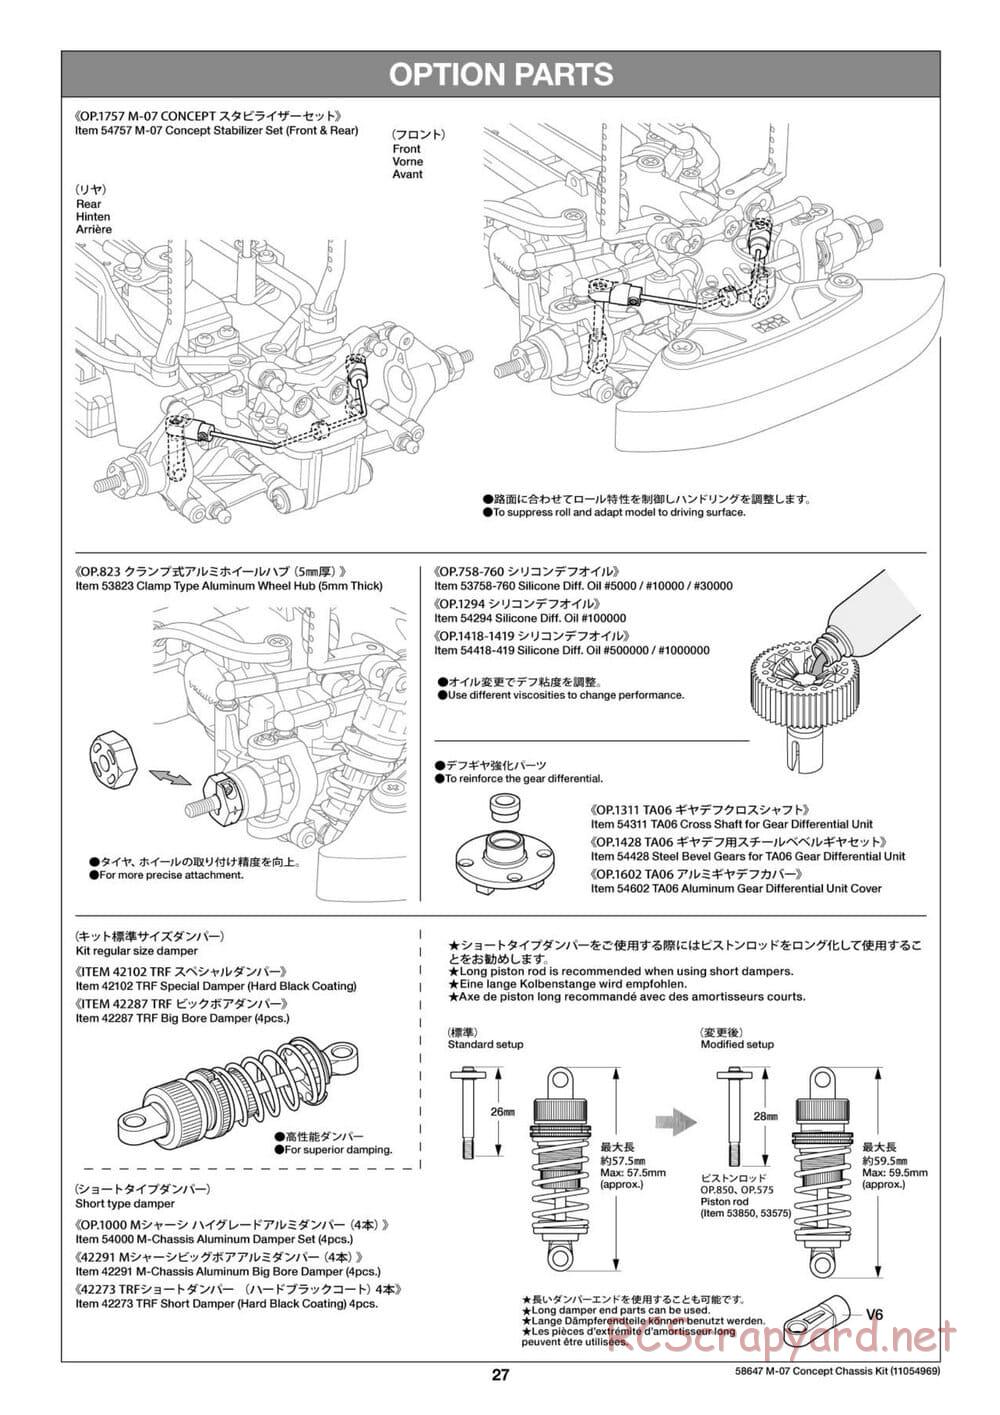 Tamiya - M-07 Concept Chassis - Manual - Page 27